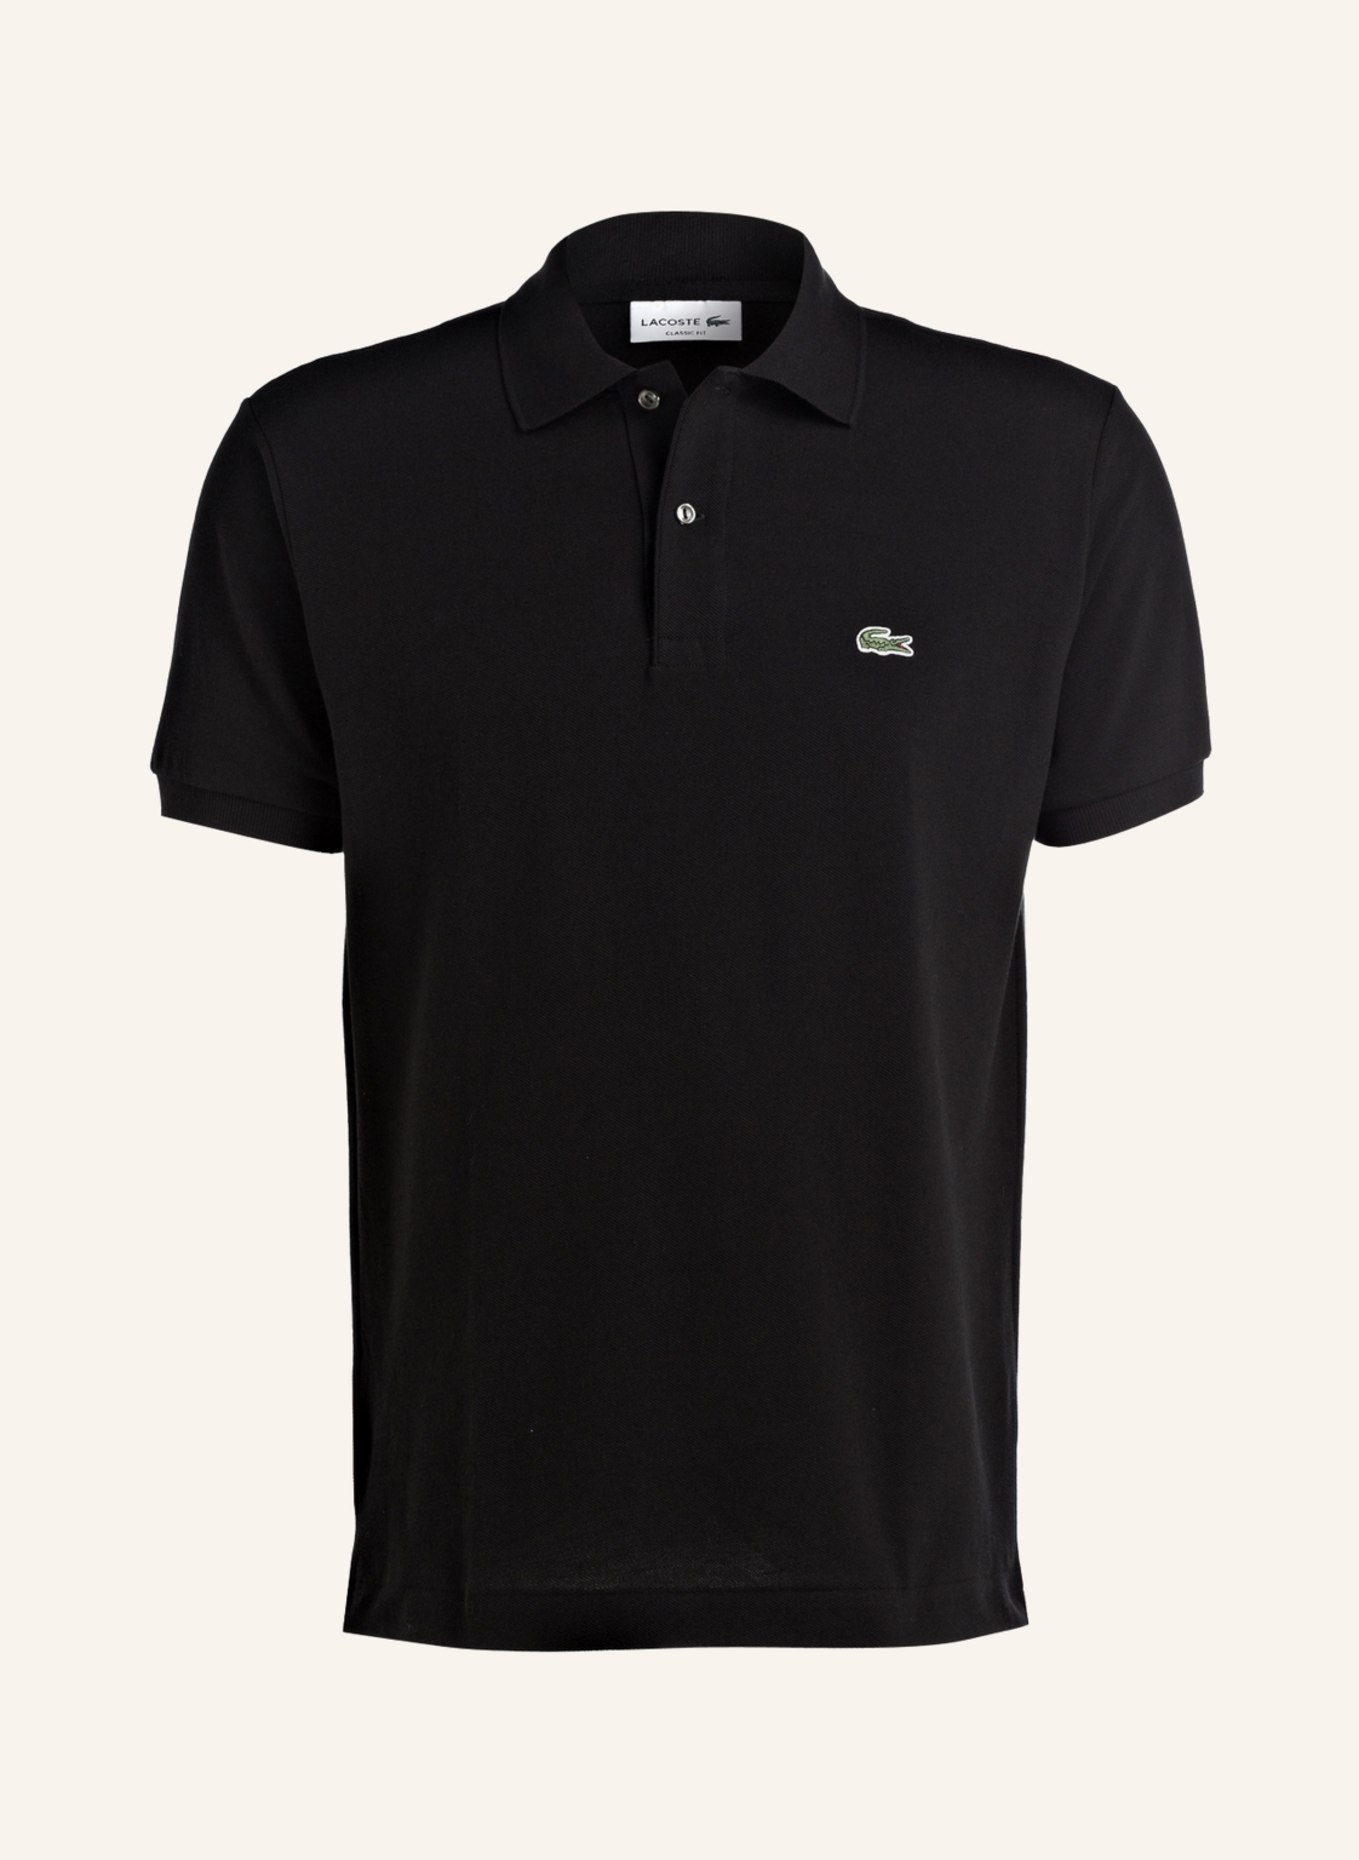 LACOSTE Piqué-Poloshirt Classic Fit, Farbe: SCHWARZ (Bild 1)